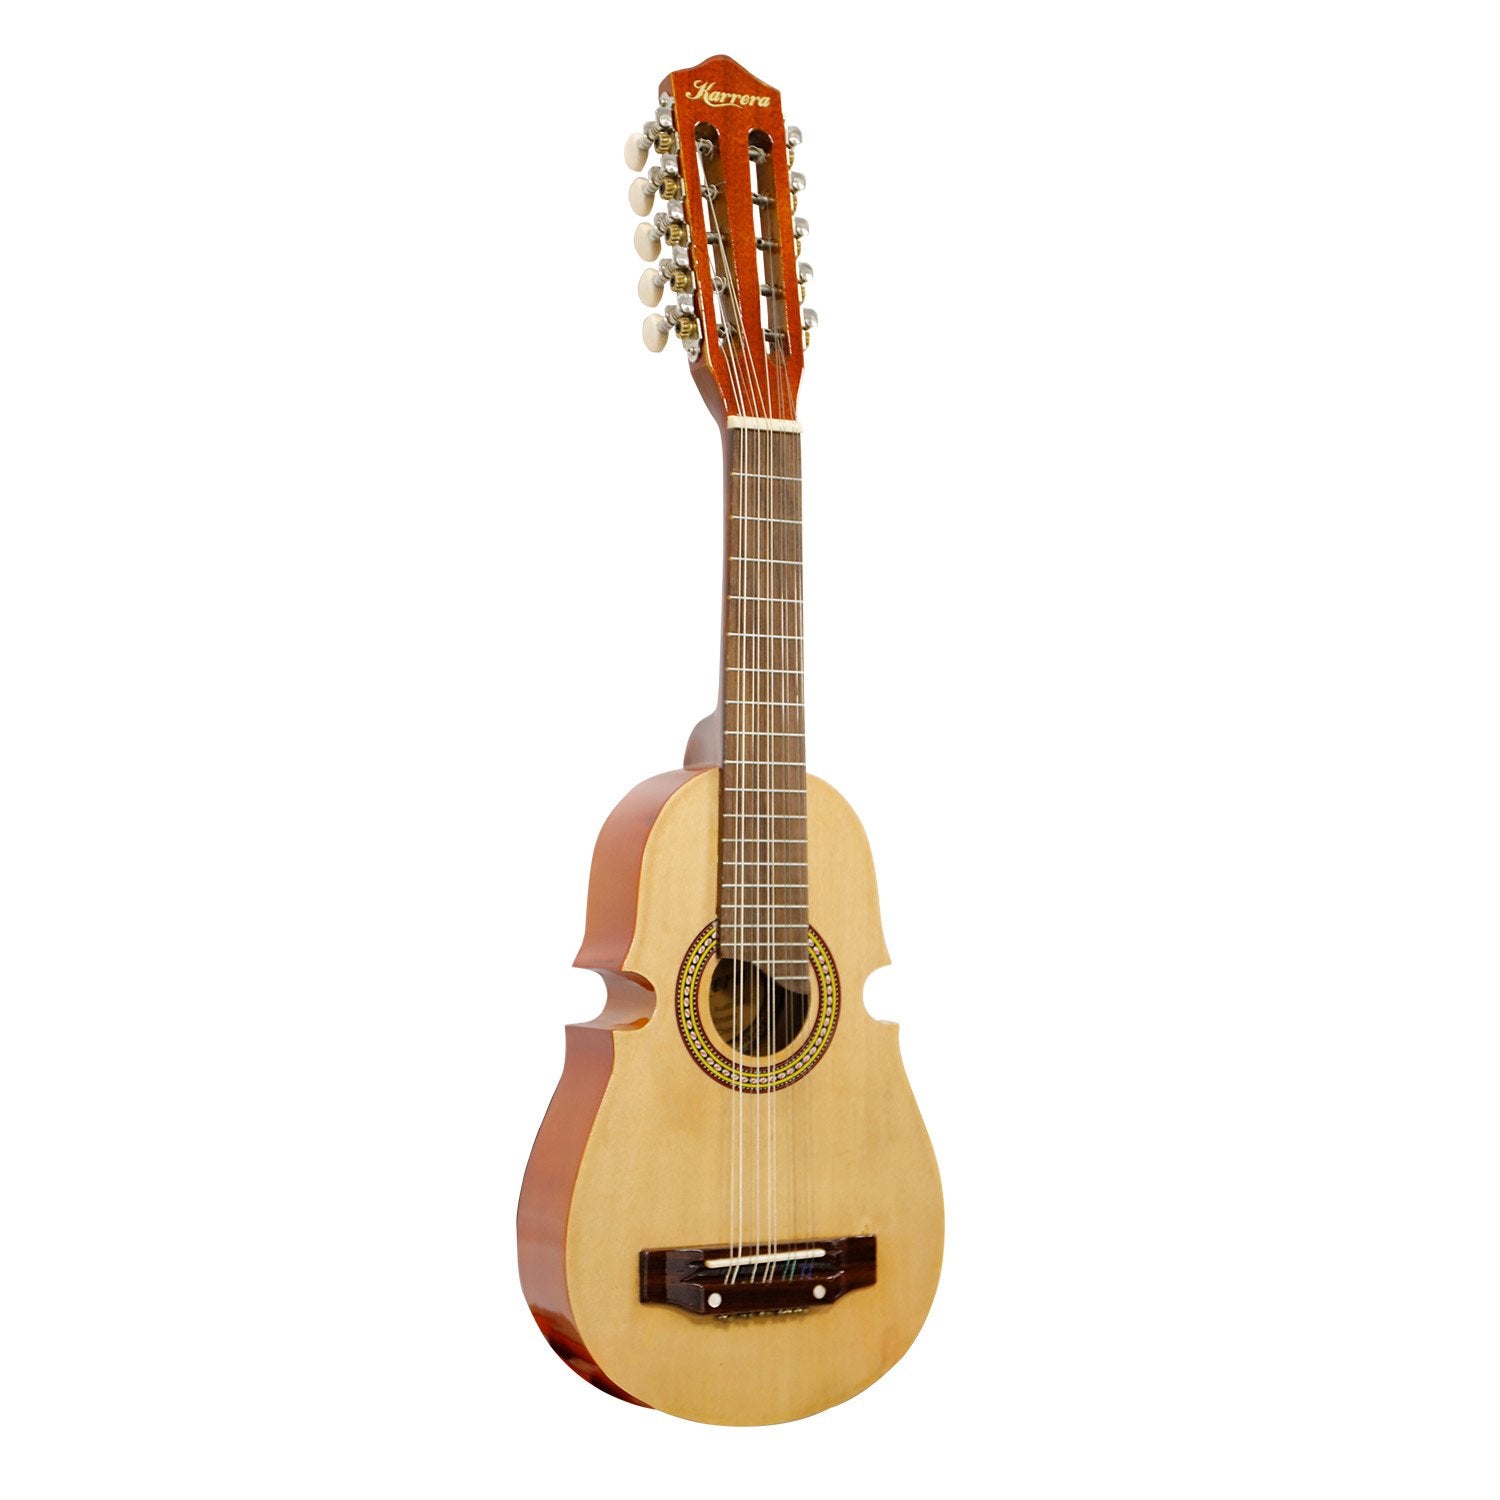 High-Gloss Wood Cuatro Guitar, 25in, Geared Tuners - Karrera